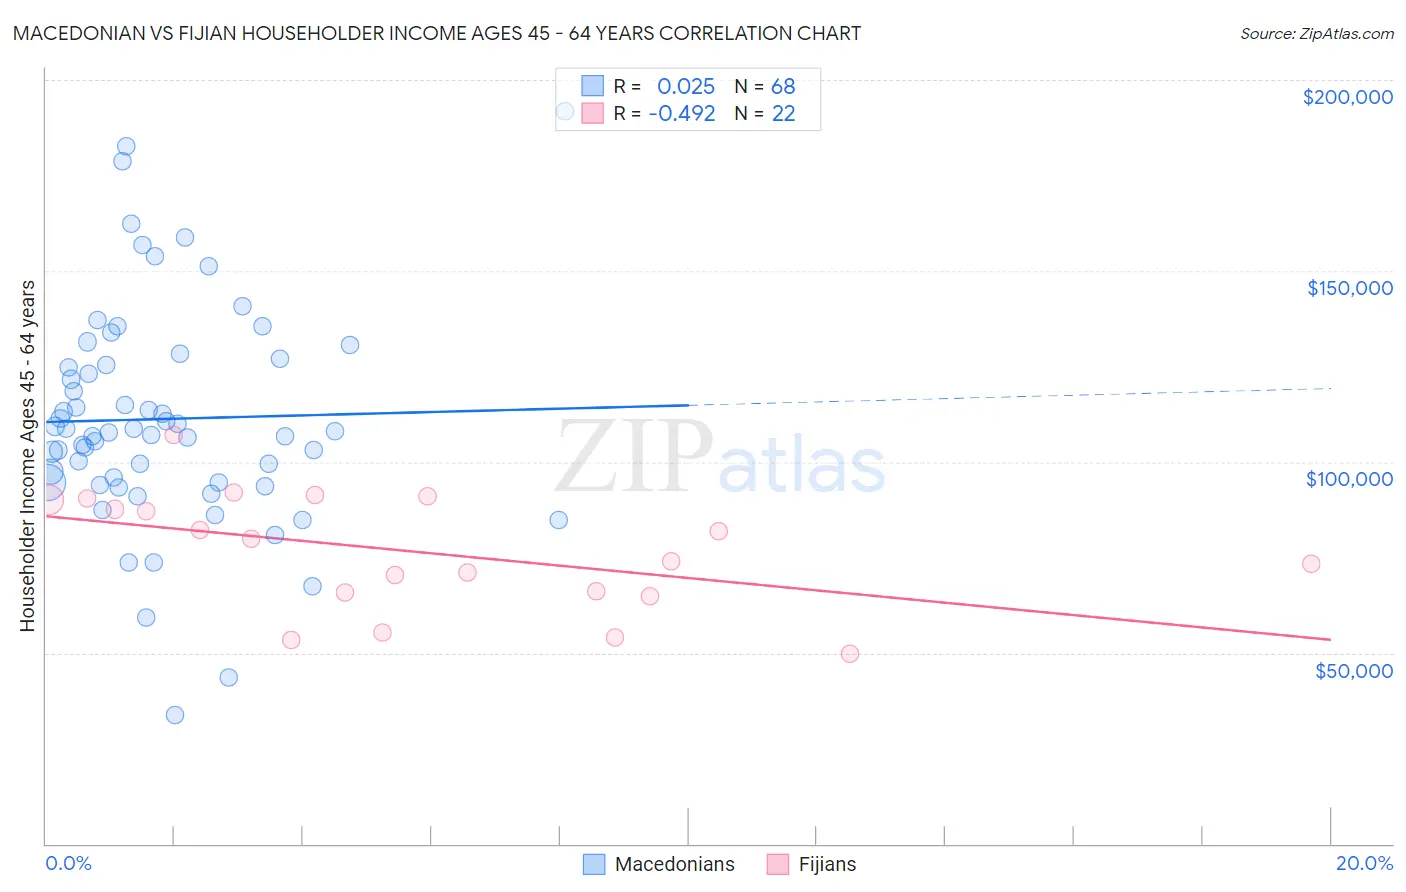 Macedonian vs Fijian Householder Income Ages 45 - 64 years